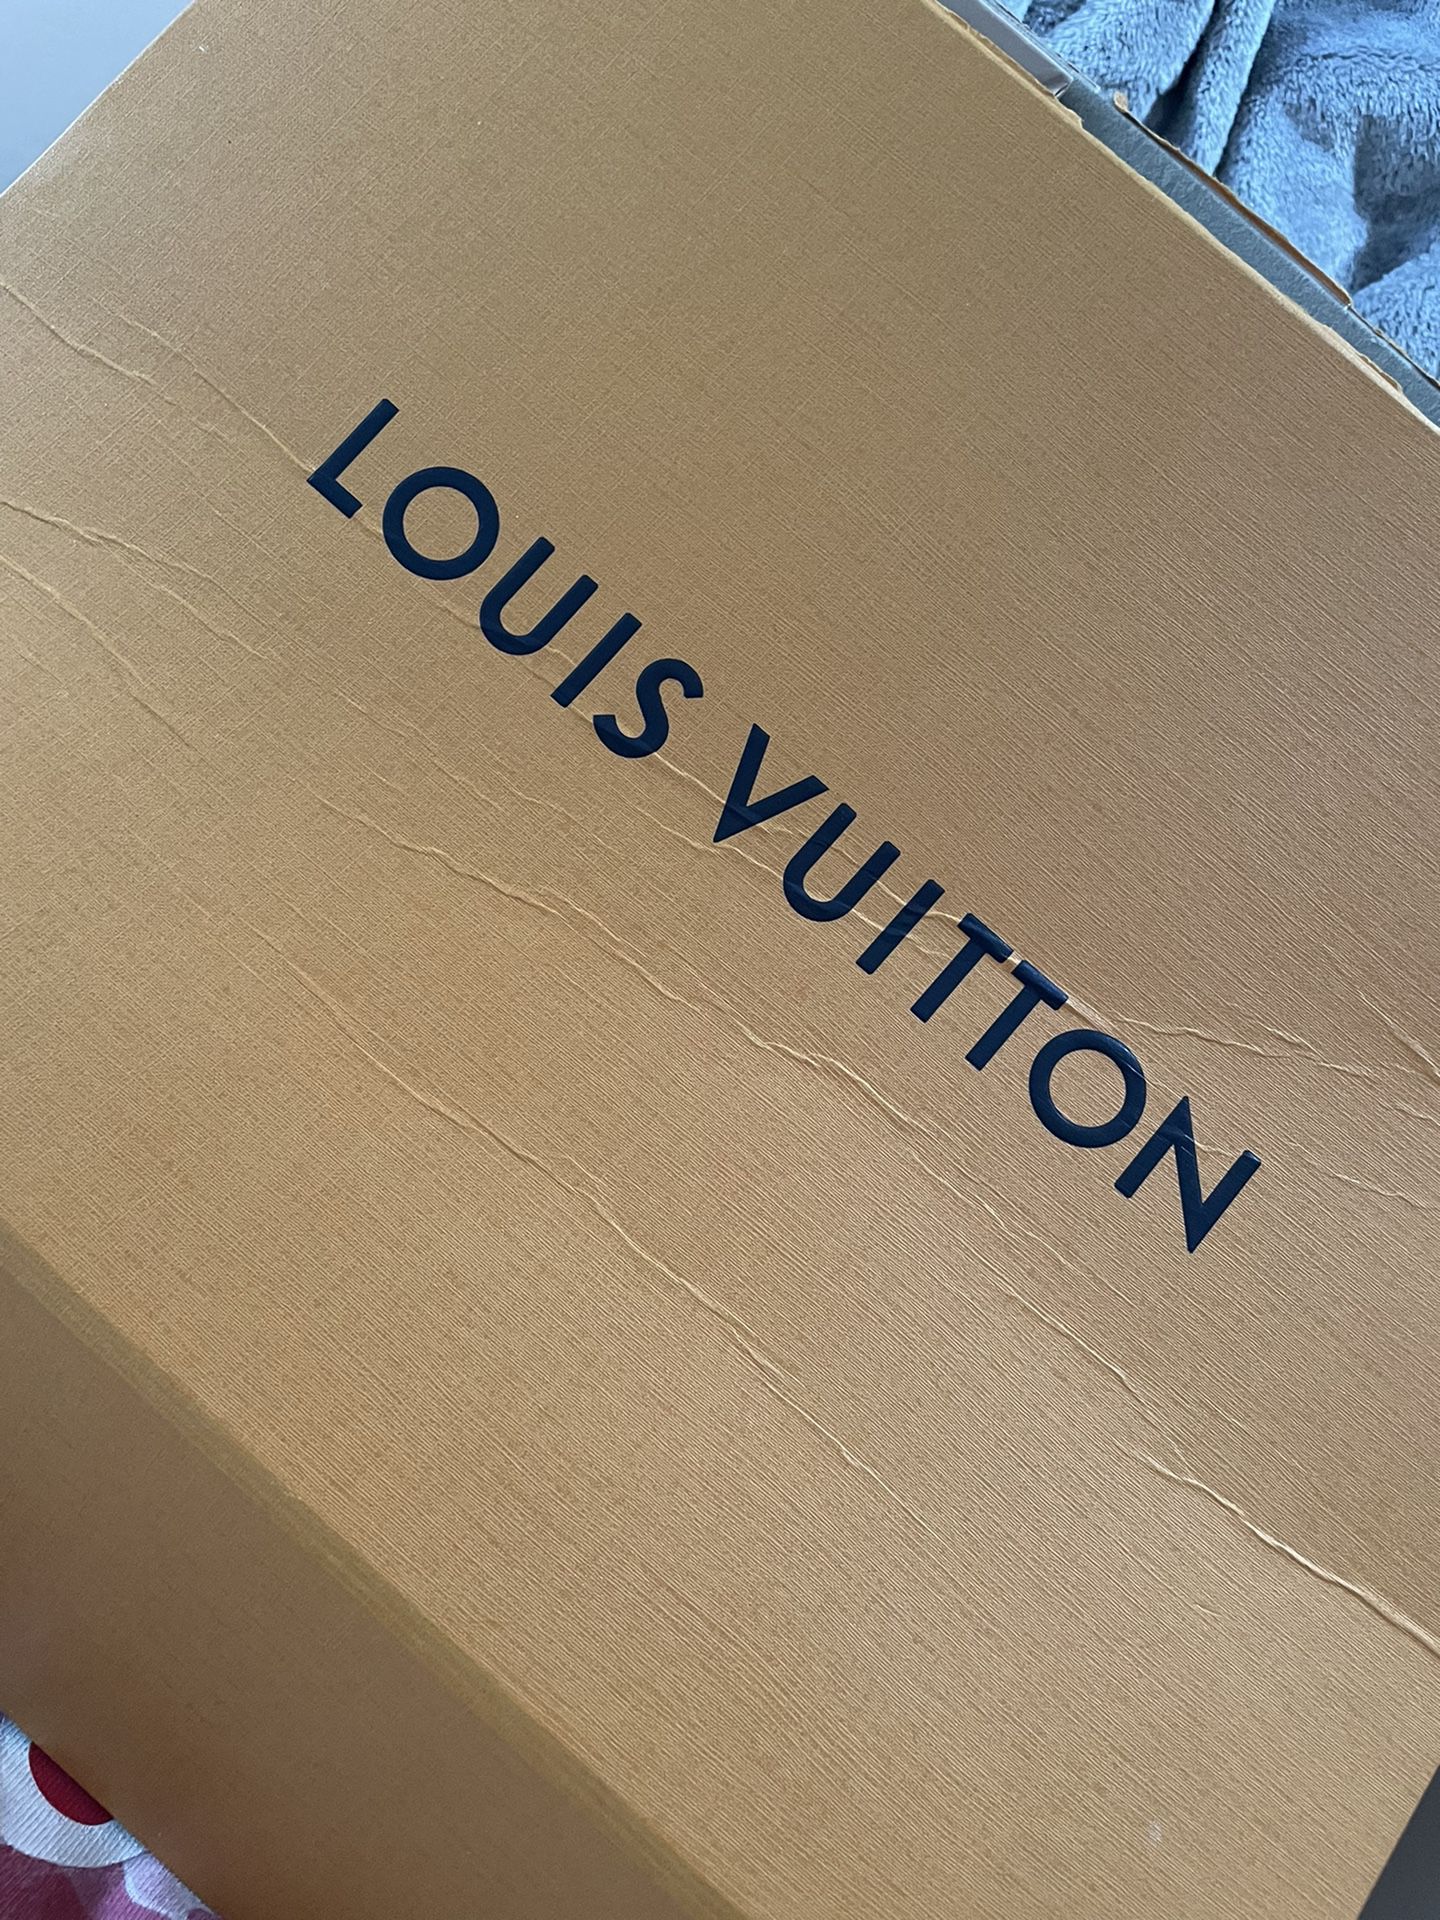 Louis Vuitton LV Petit Damier Scarf 402330 for Sale in Miami, FL - OfferUp